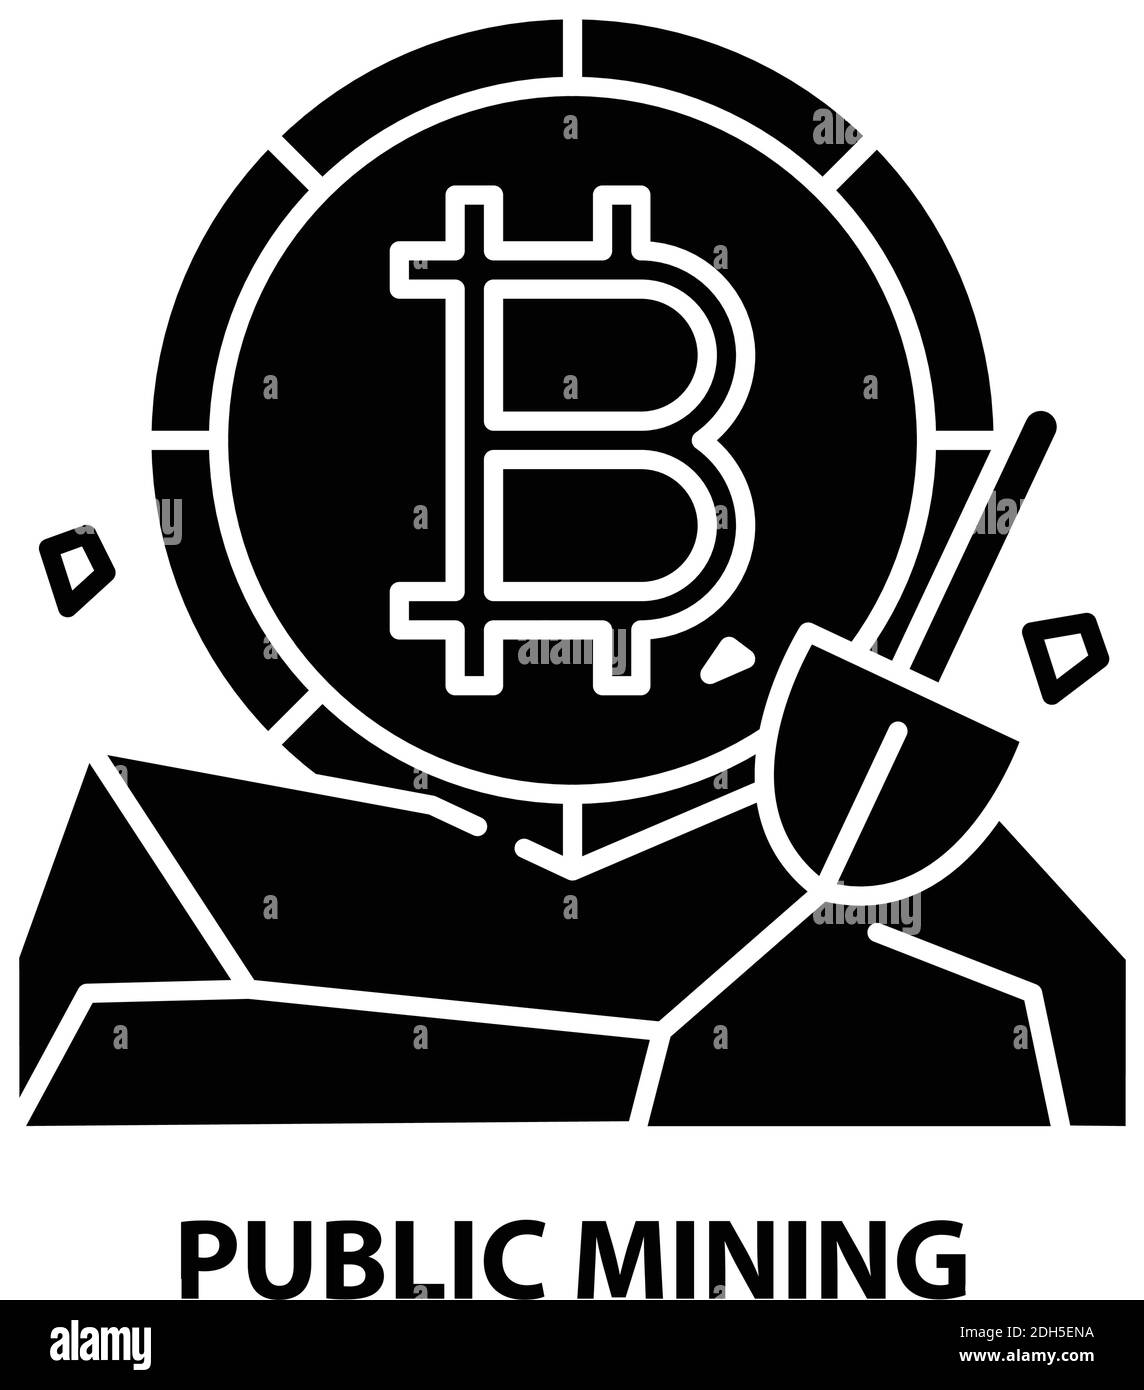 public mining icon, black vector sign with editable strokes, concept illustration Stock Vector